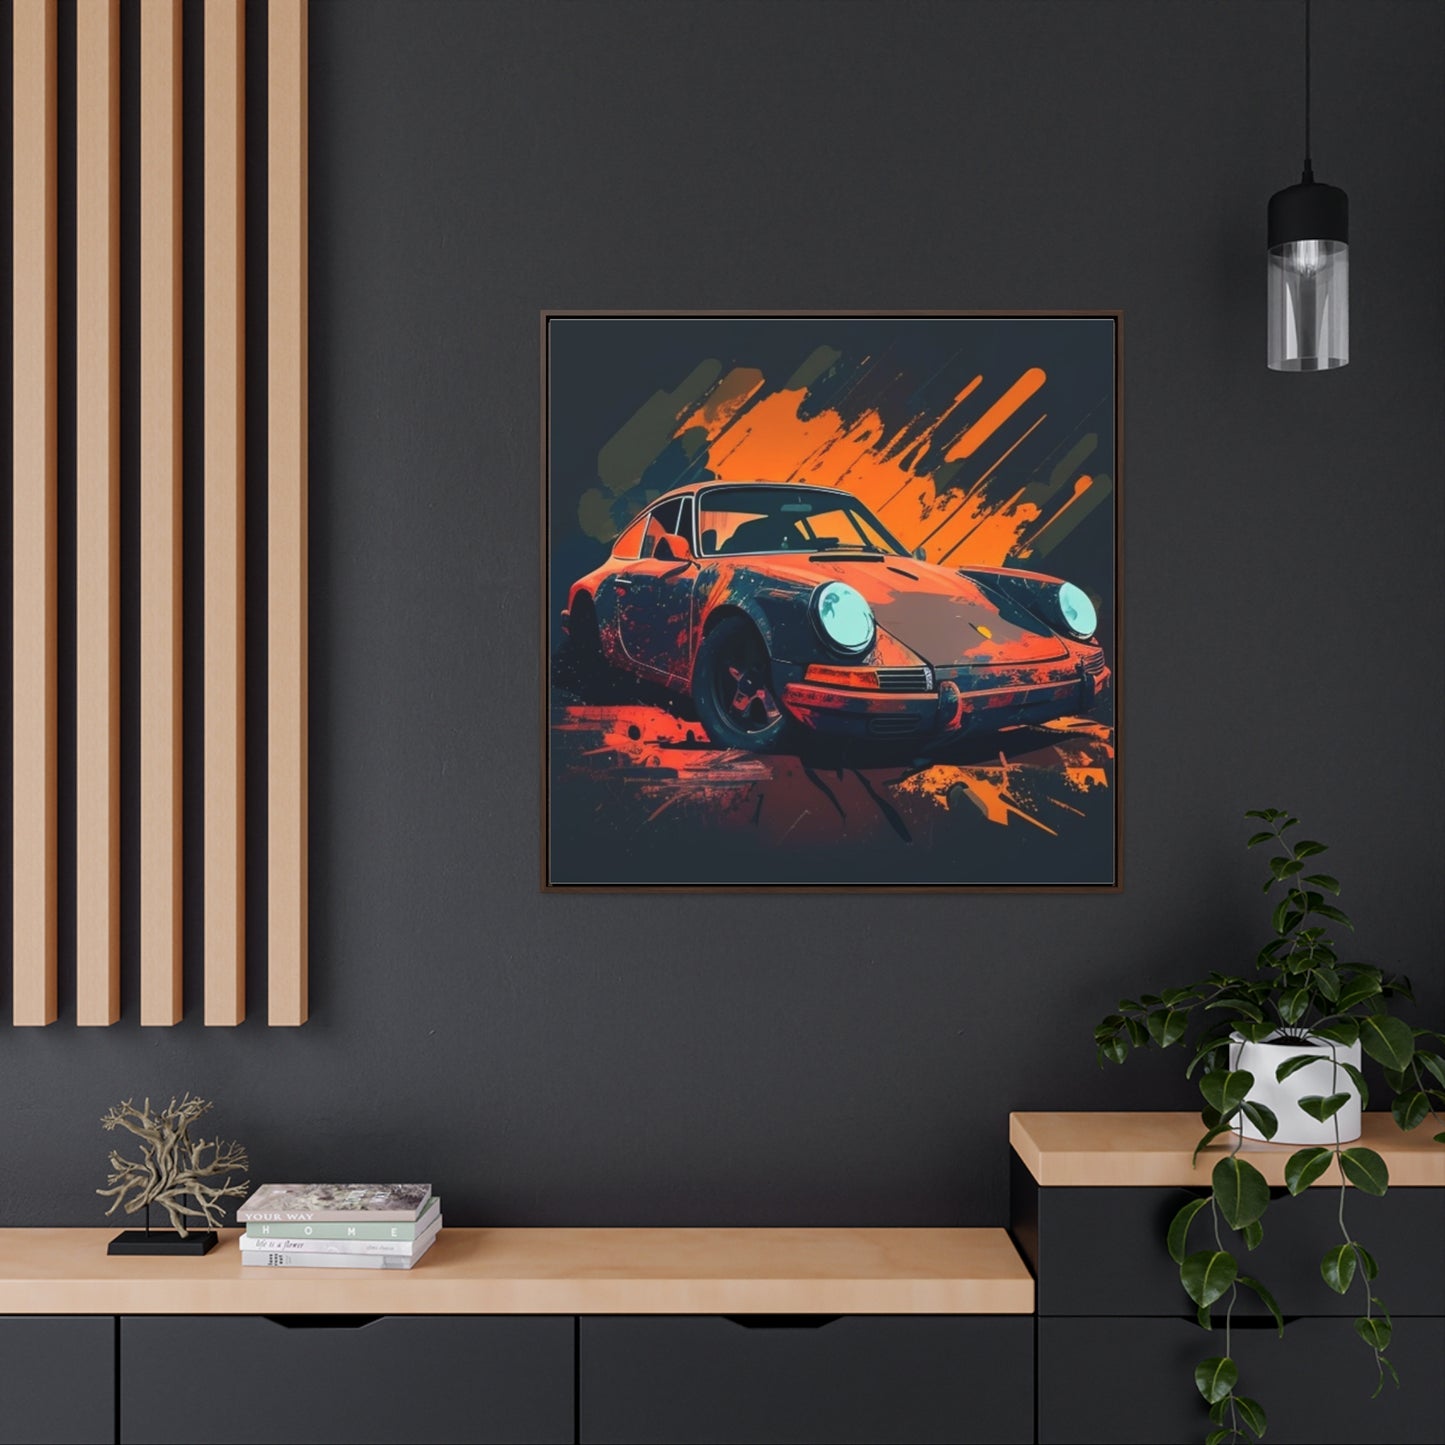 Gallery Canvas Wraps, Square Frame Porsche Abstract 3